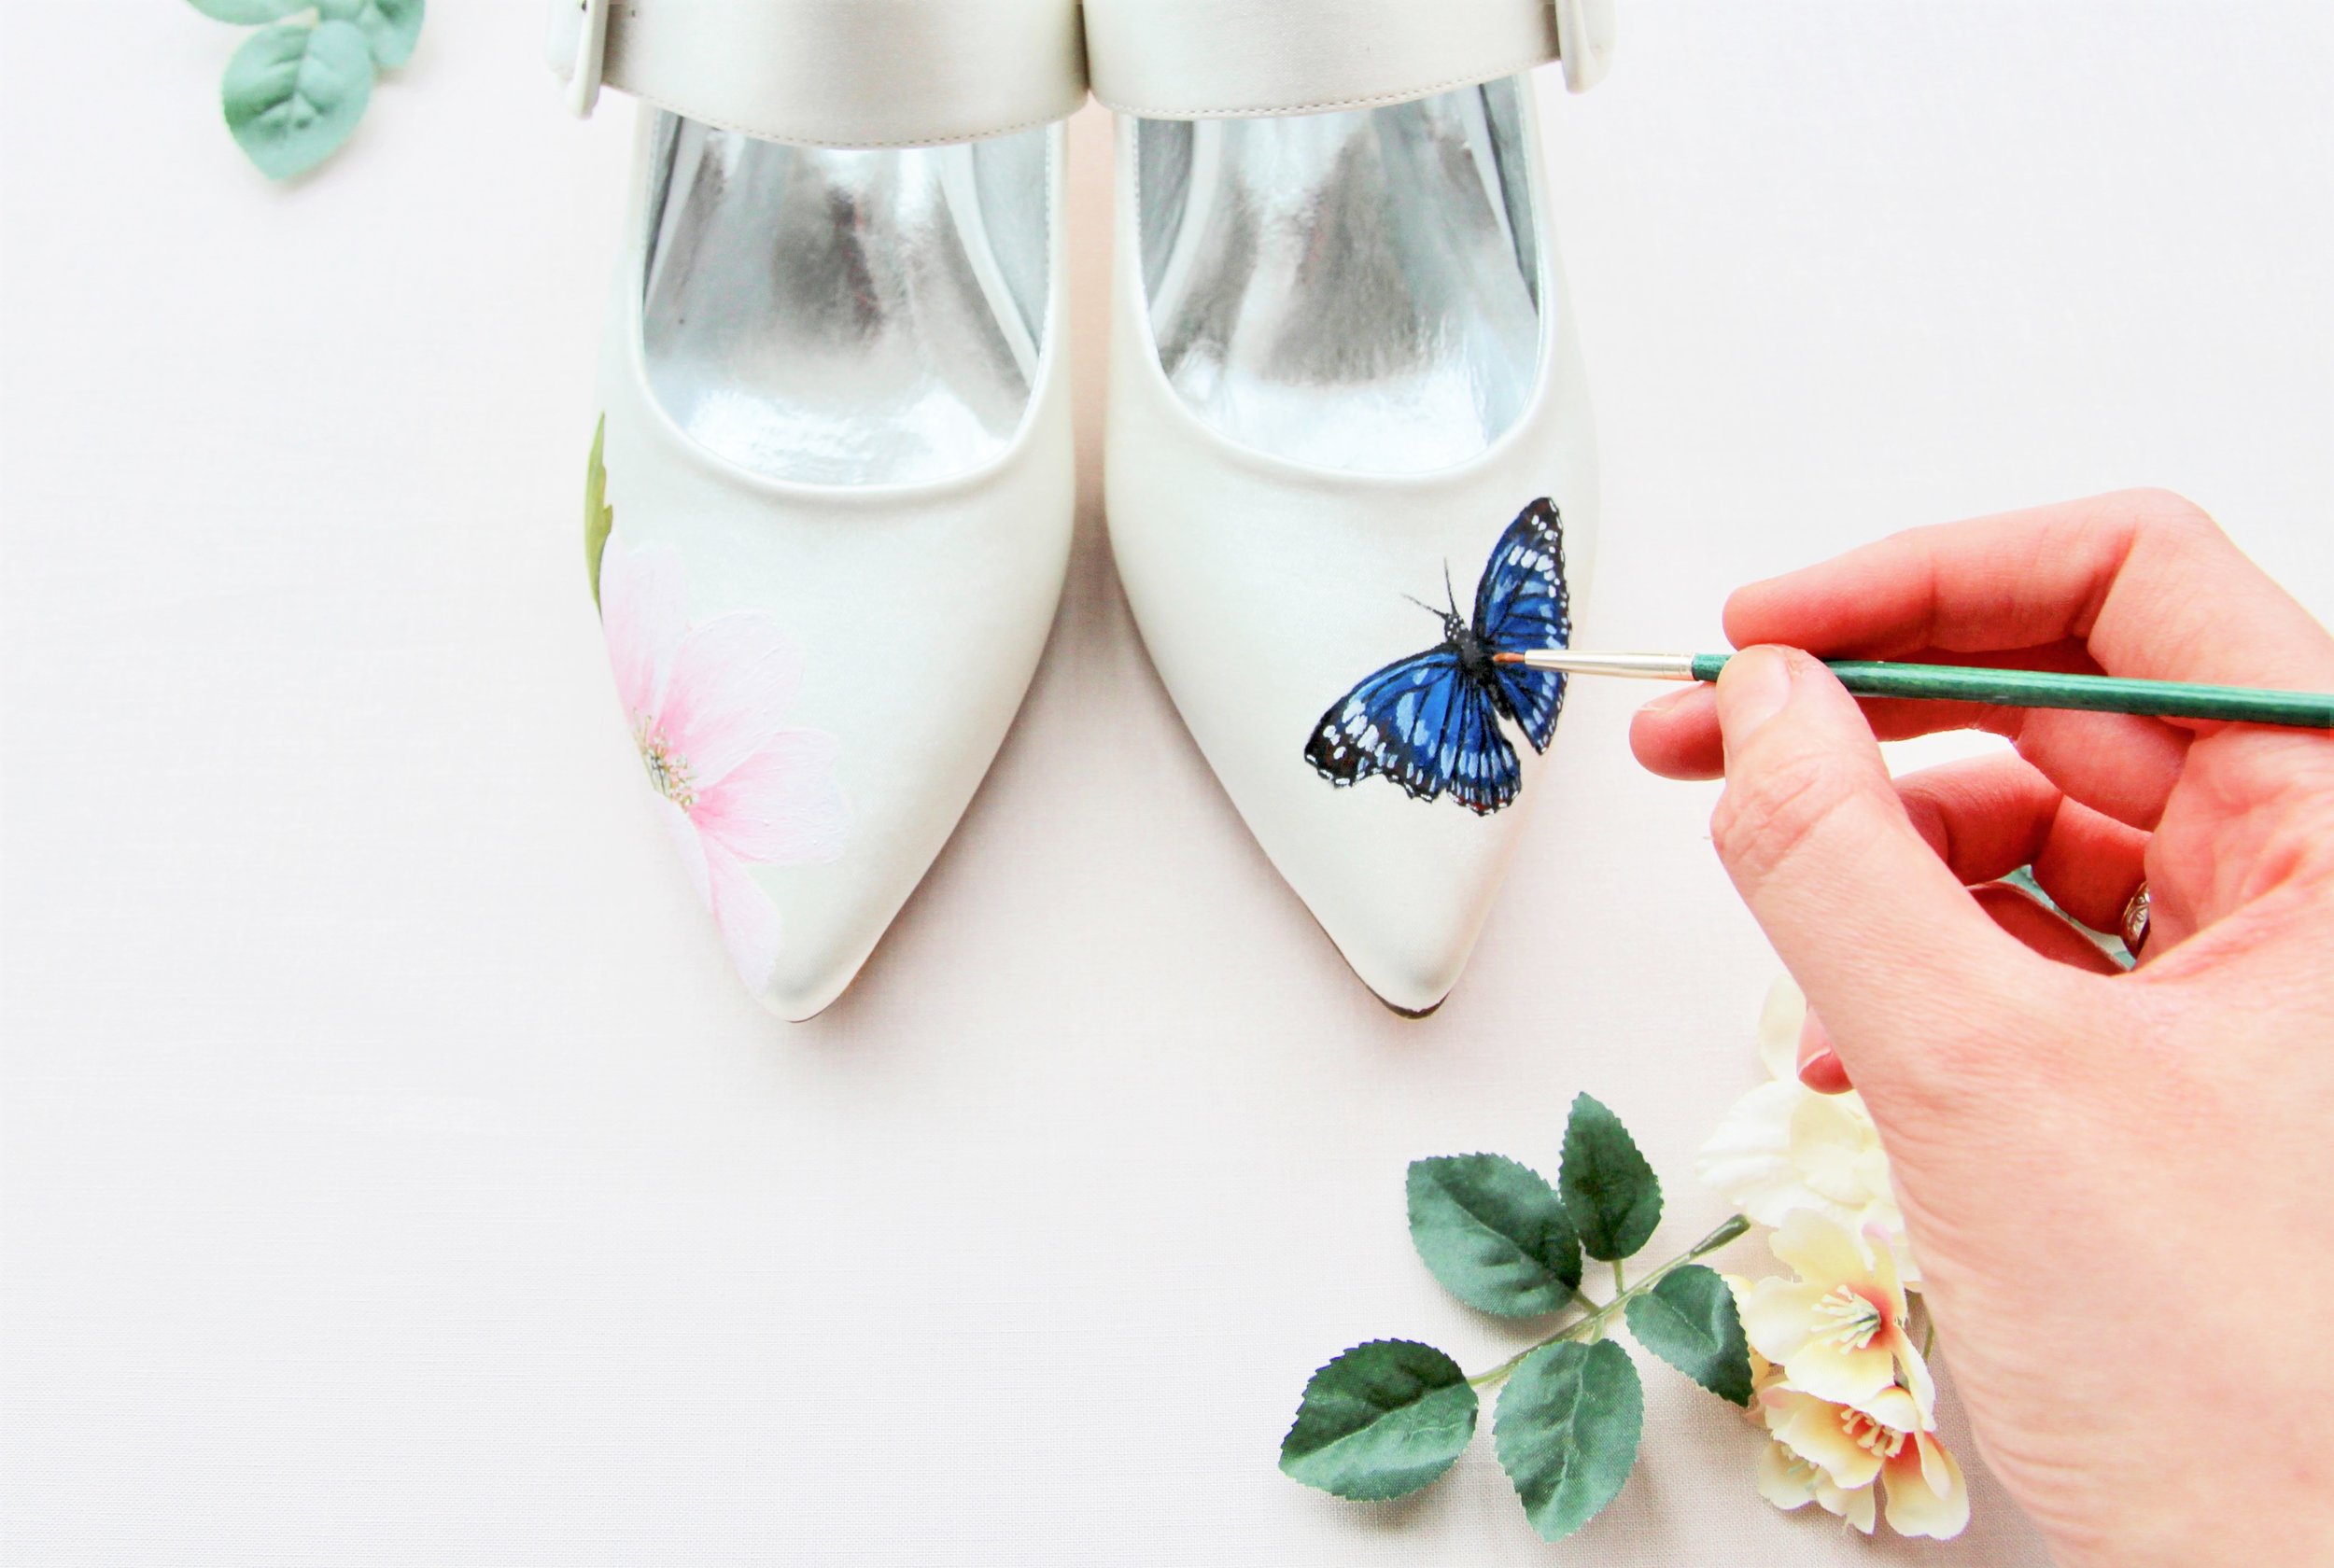 Bridal beetles insect Hand Made Shoe High Heels Size 3 4 5 6 7 8 Platform UK Painted Custom Bespoke